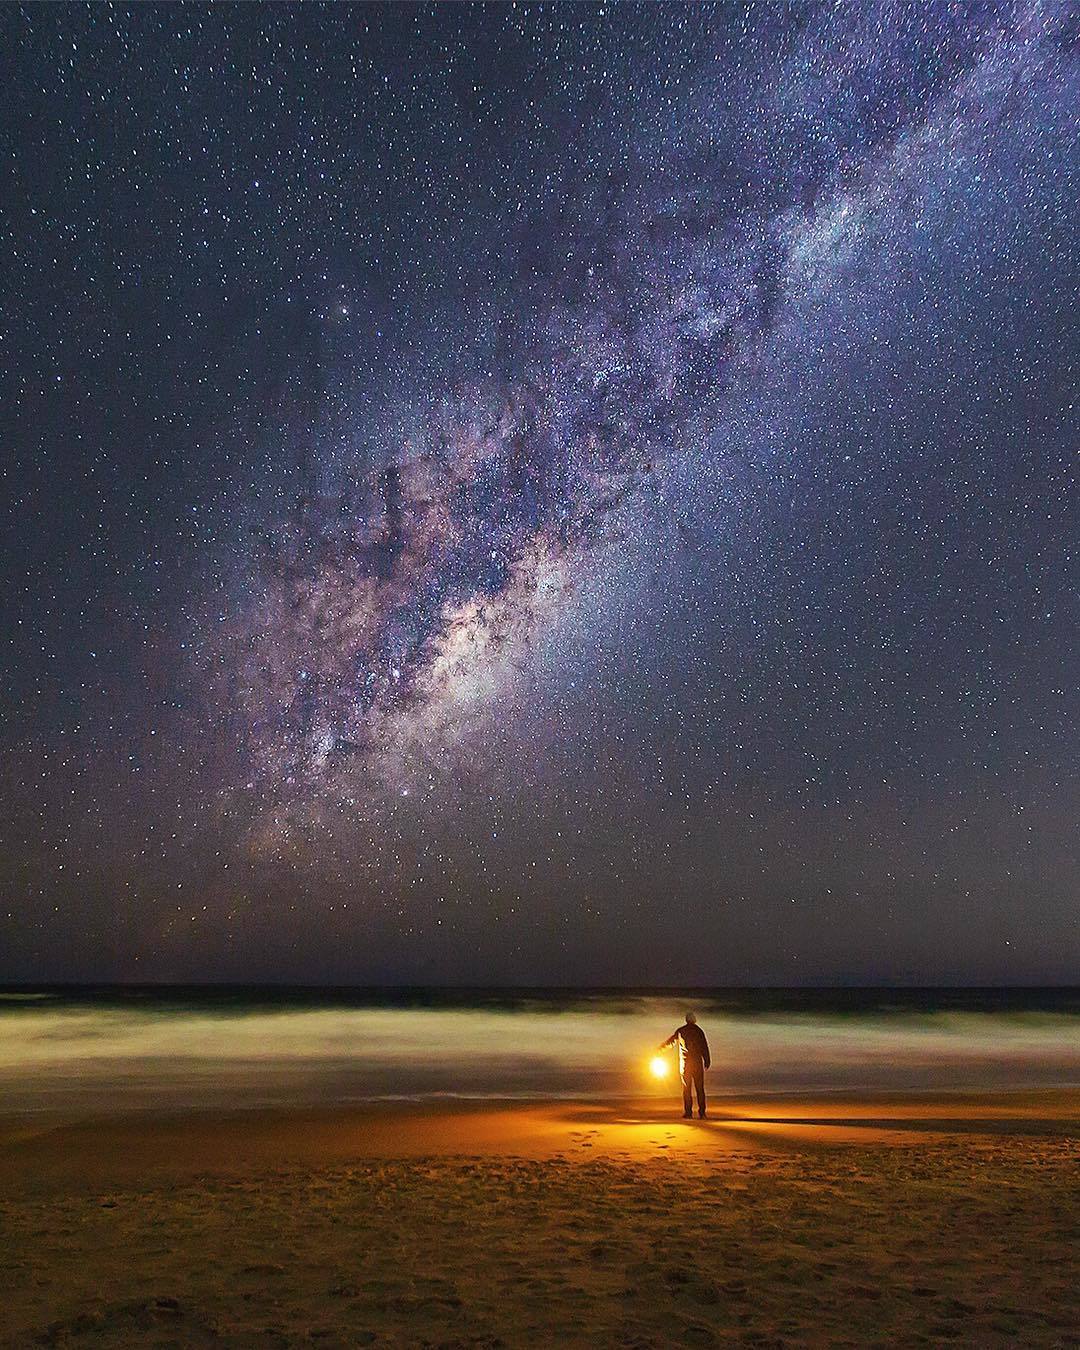  灿烂星光，Stephen Waller摄于昆士兰州阳光海岸。 